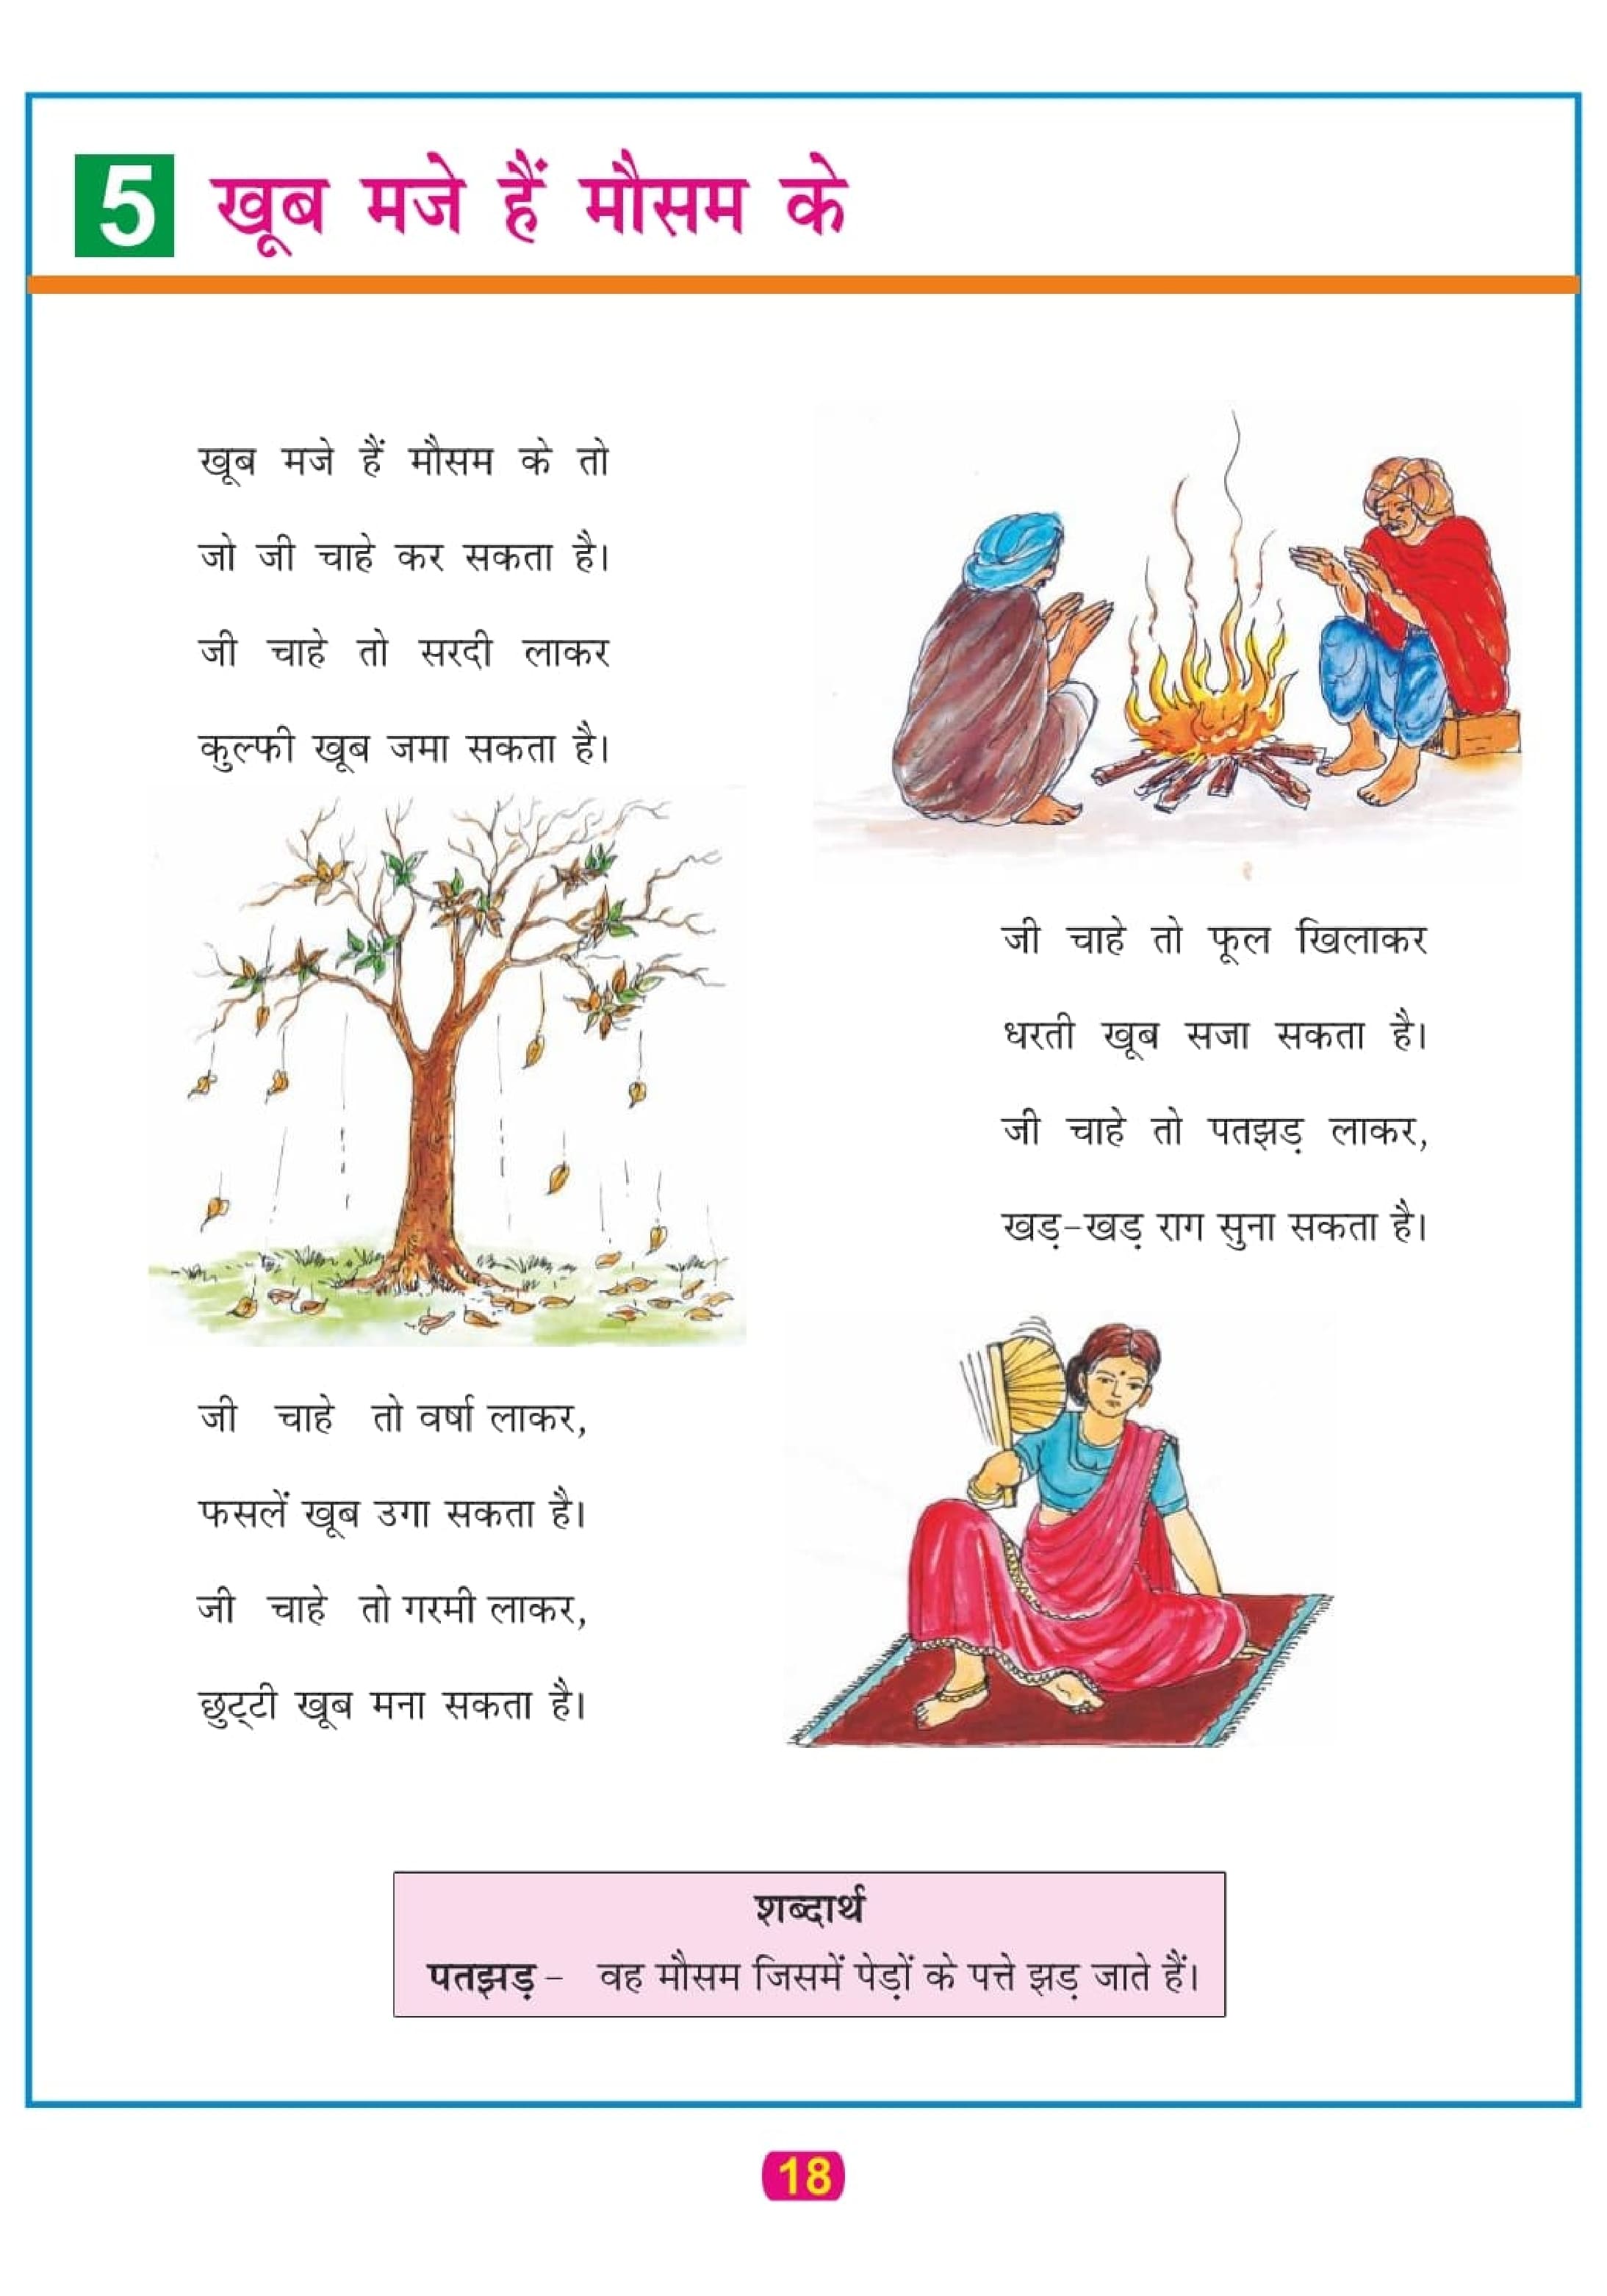 Bihar Board Book for Class 4 Hindi (PDF)